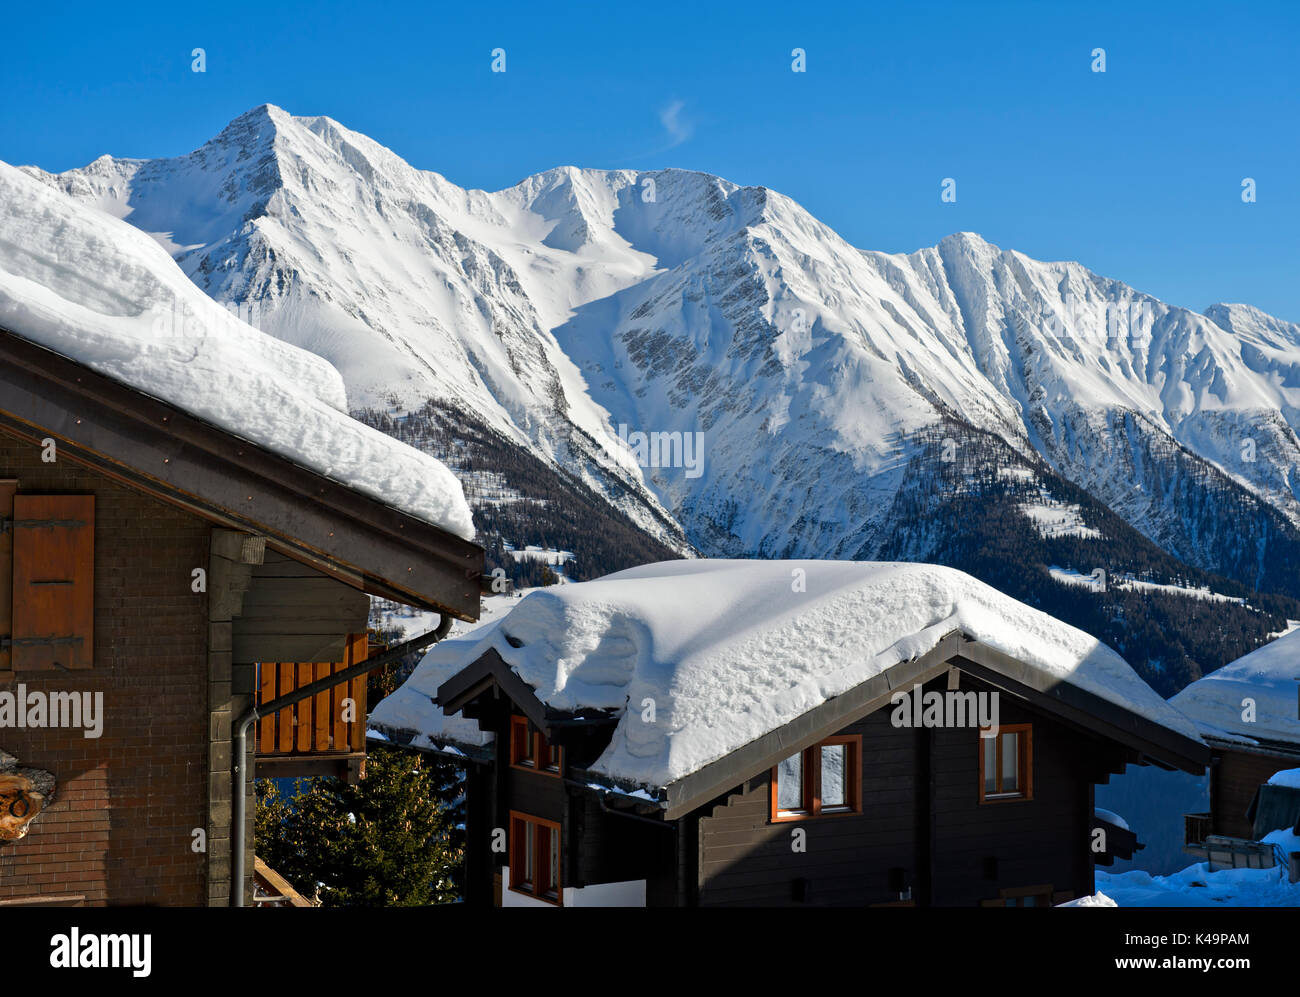 Winter In A Mountain Village In The Swiss Alps, Bettmeralp, Valais, Switzerland Stock Photo